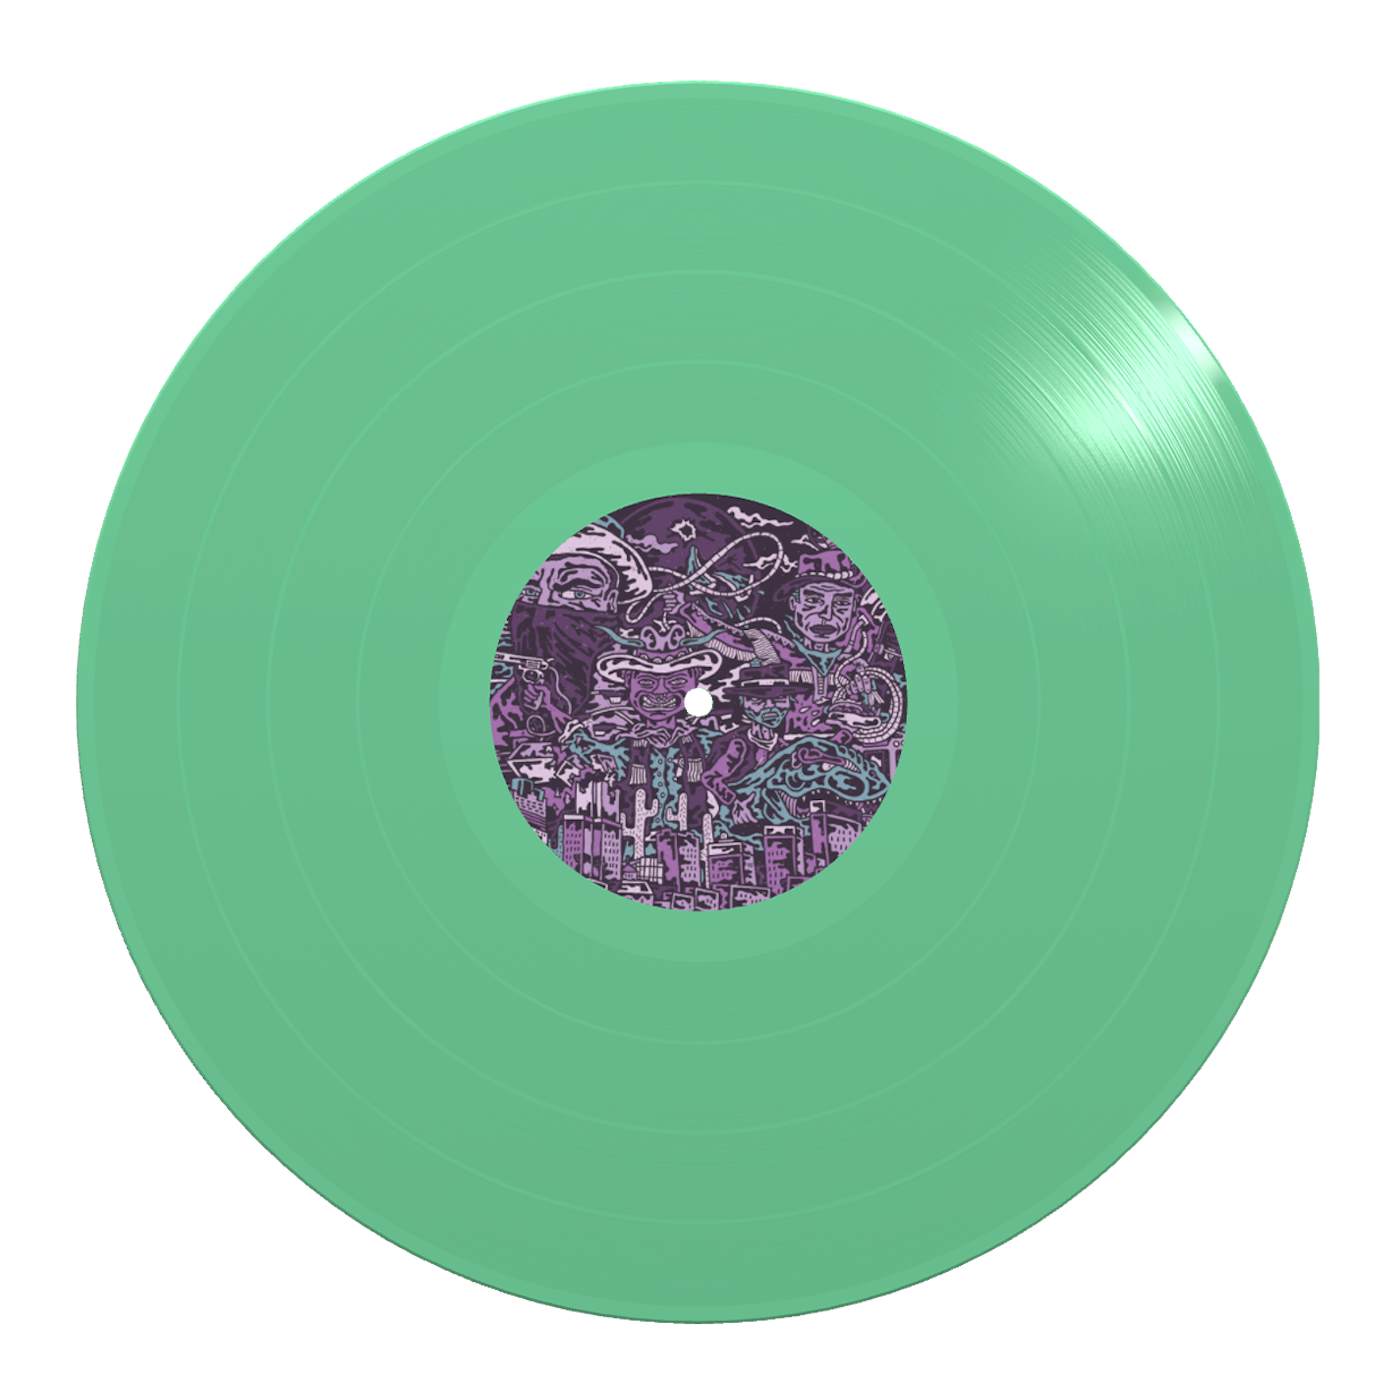 Buggin - Concrete Cowboys Opaque Mint Green Vinyl